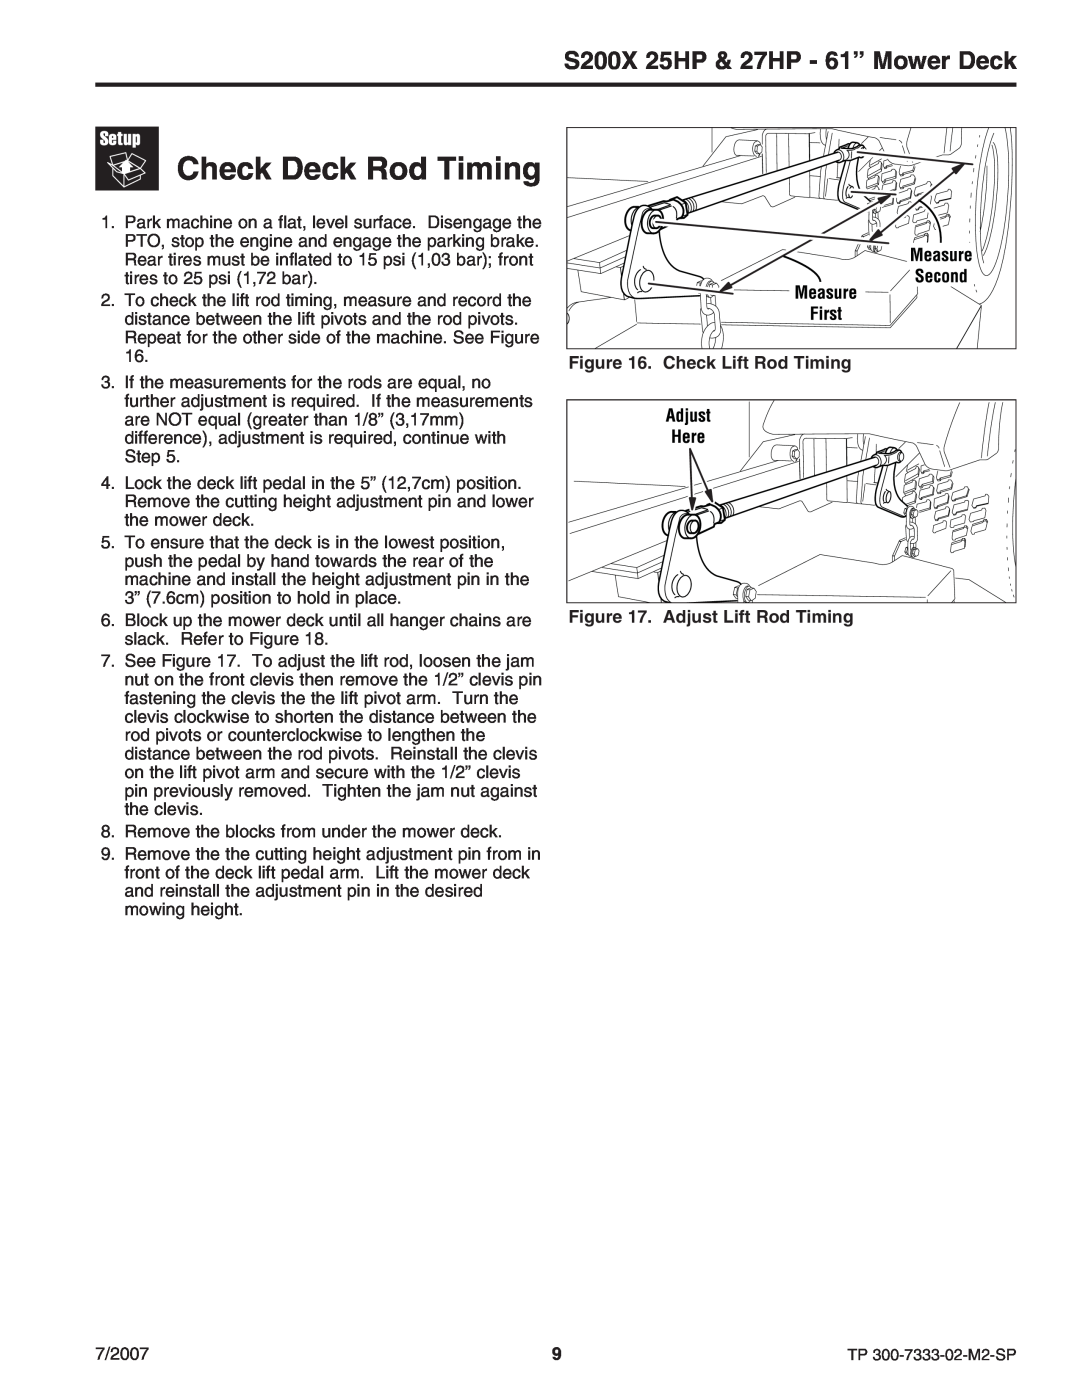 Briggs & Stratton 5900664, 5900692 manual Check Deck Rod Timing, S200X 25HP & 27HP - 61” Mower Deck, Check Lift Rod Timing 